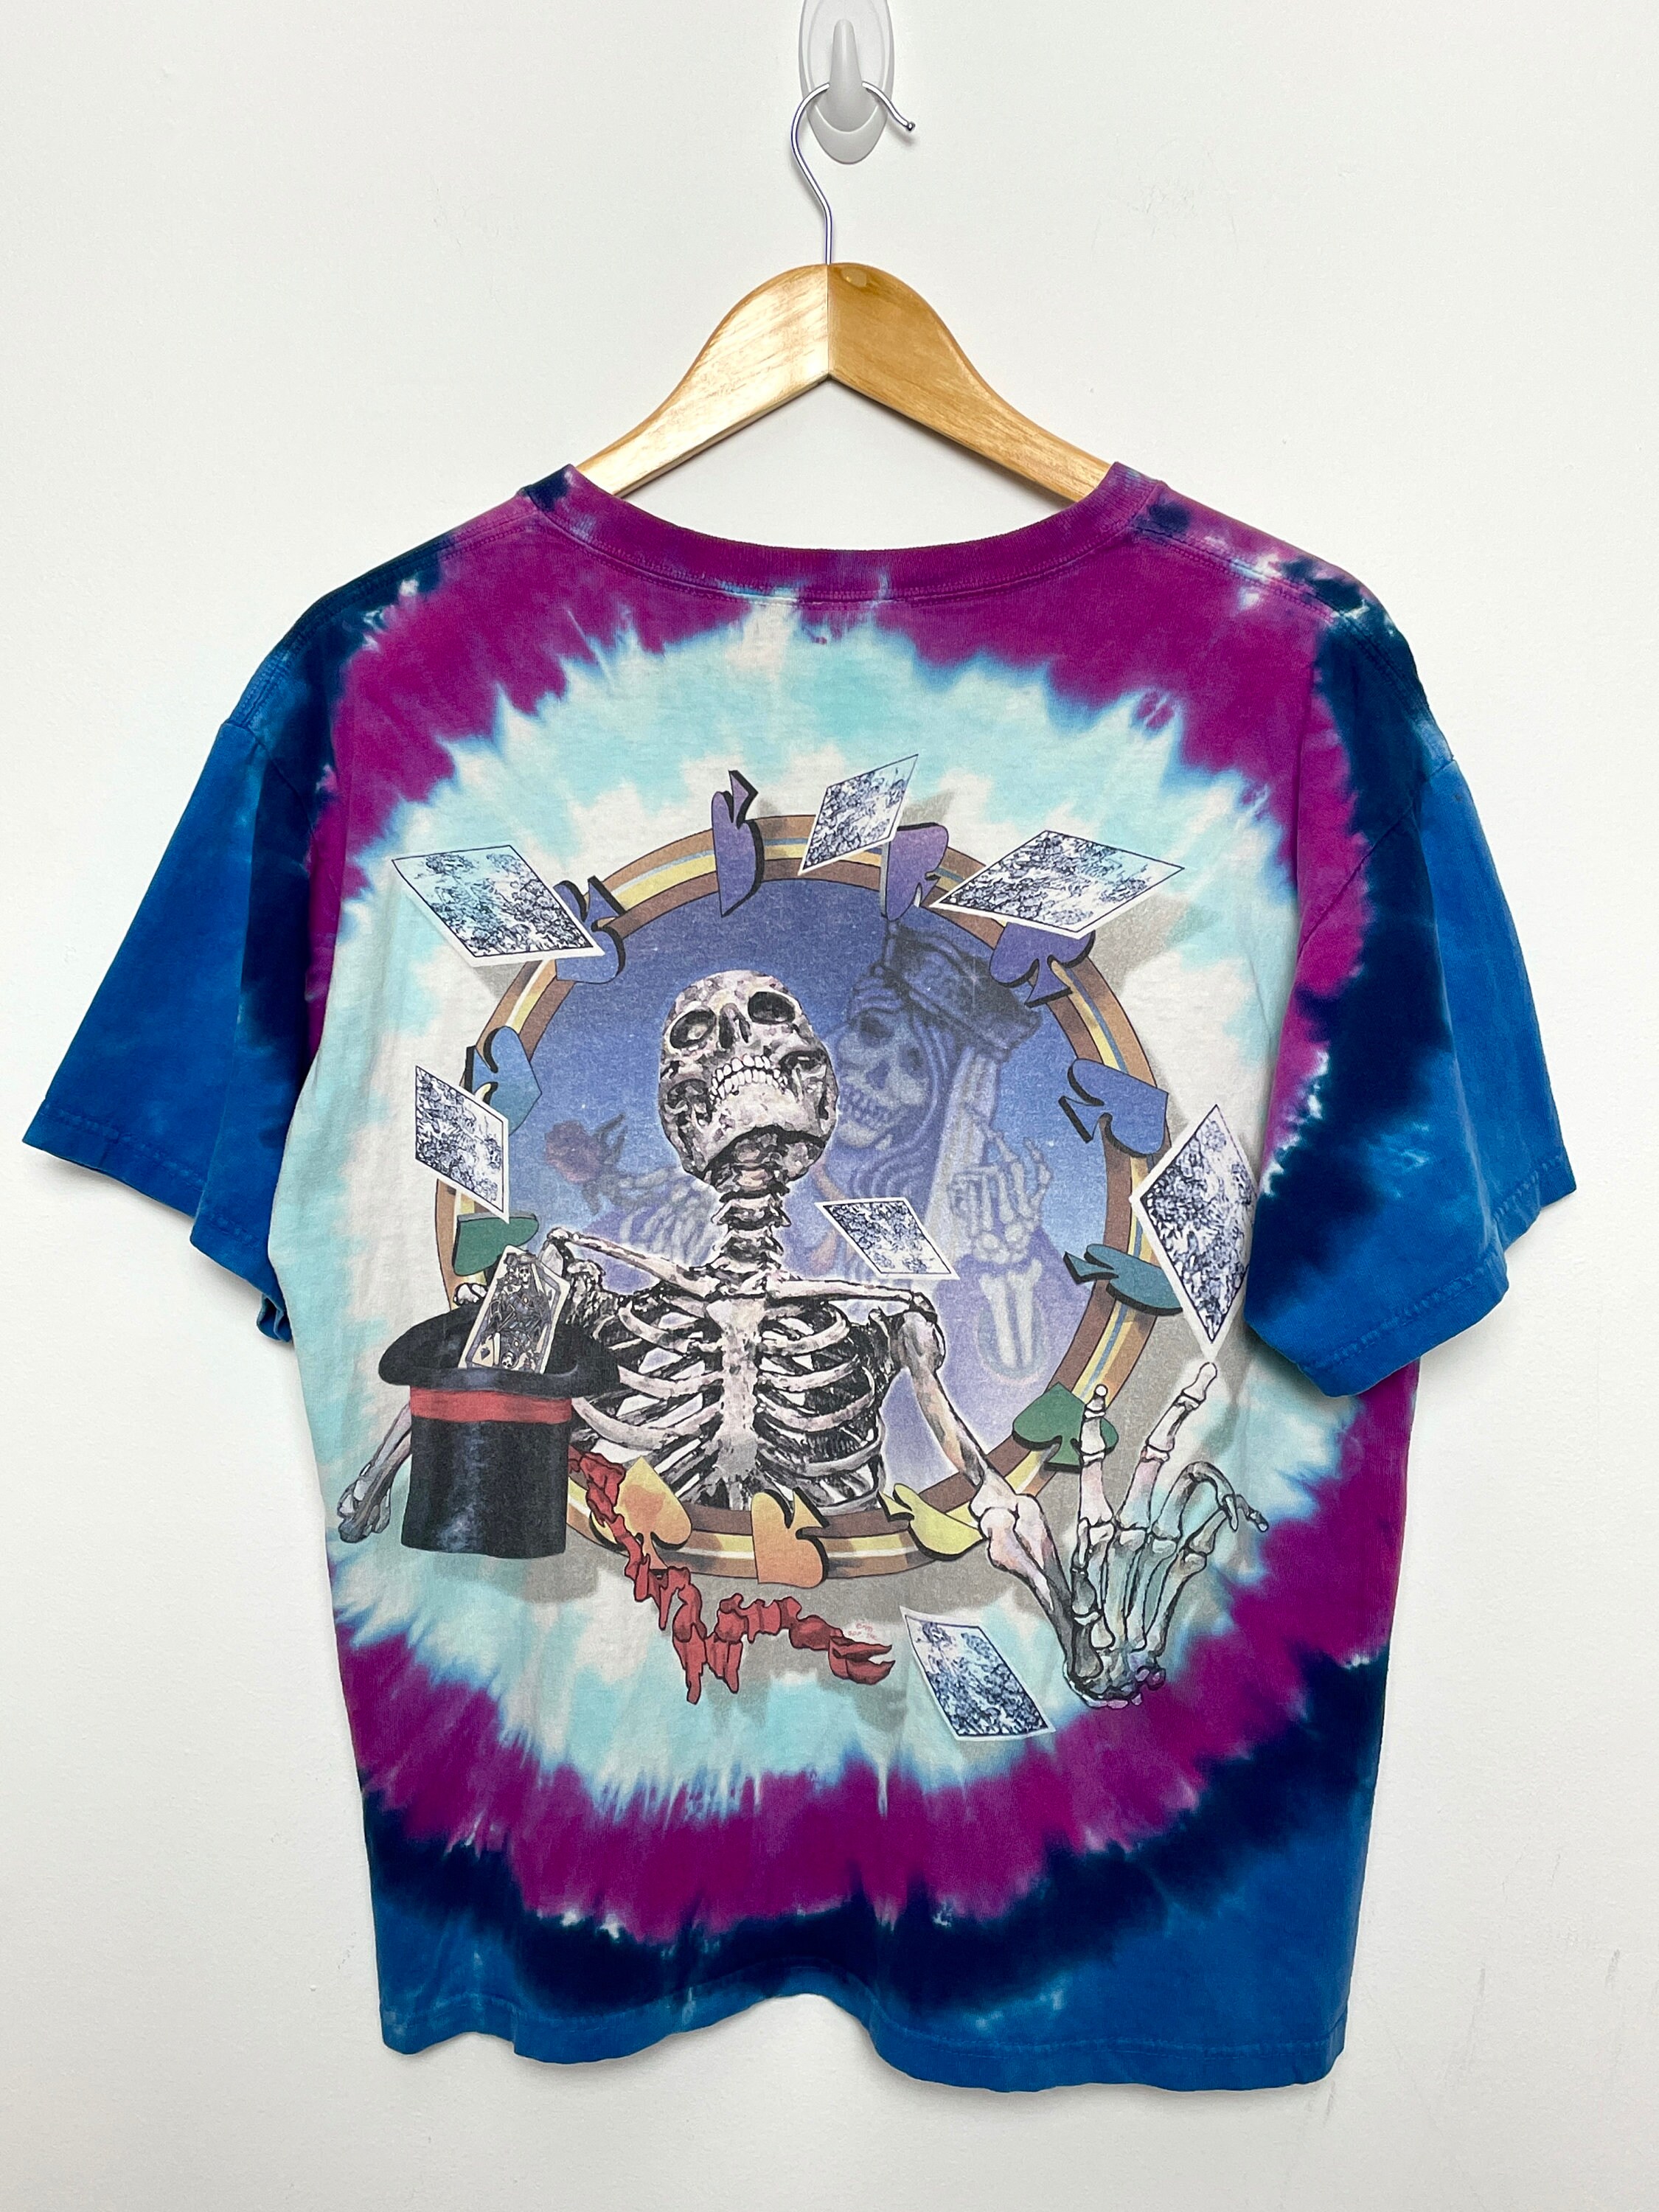 Music Vintage Tie Dye Grateful Dead Tee Shirt by Liquid Blue 1996 Size XL Made in USA